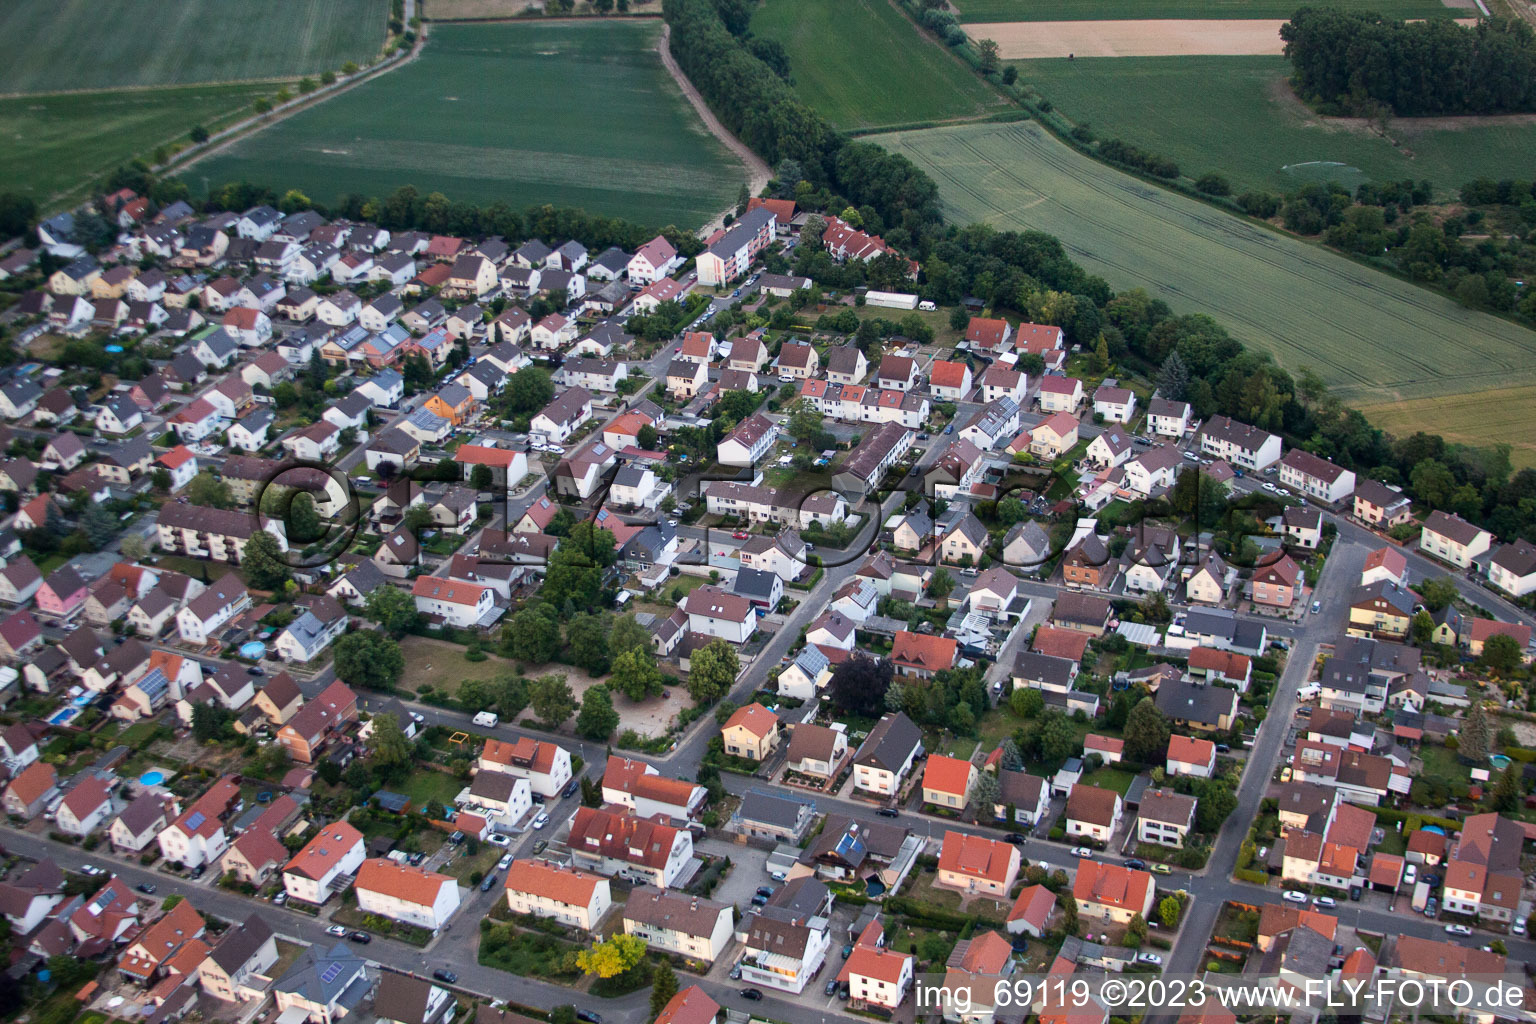 District Bobenheim in Bobenheim-Roxheim in the state Rhineland-Palatinate, Germany viewn from the air